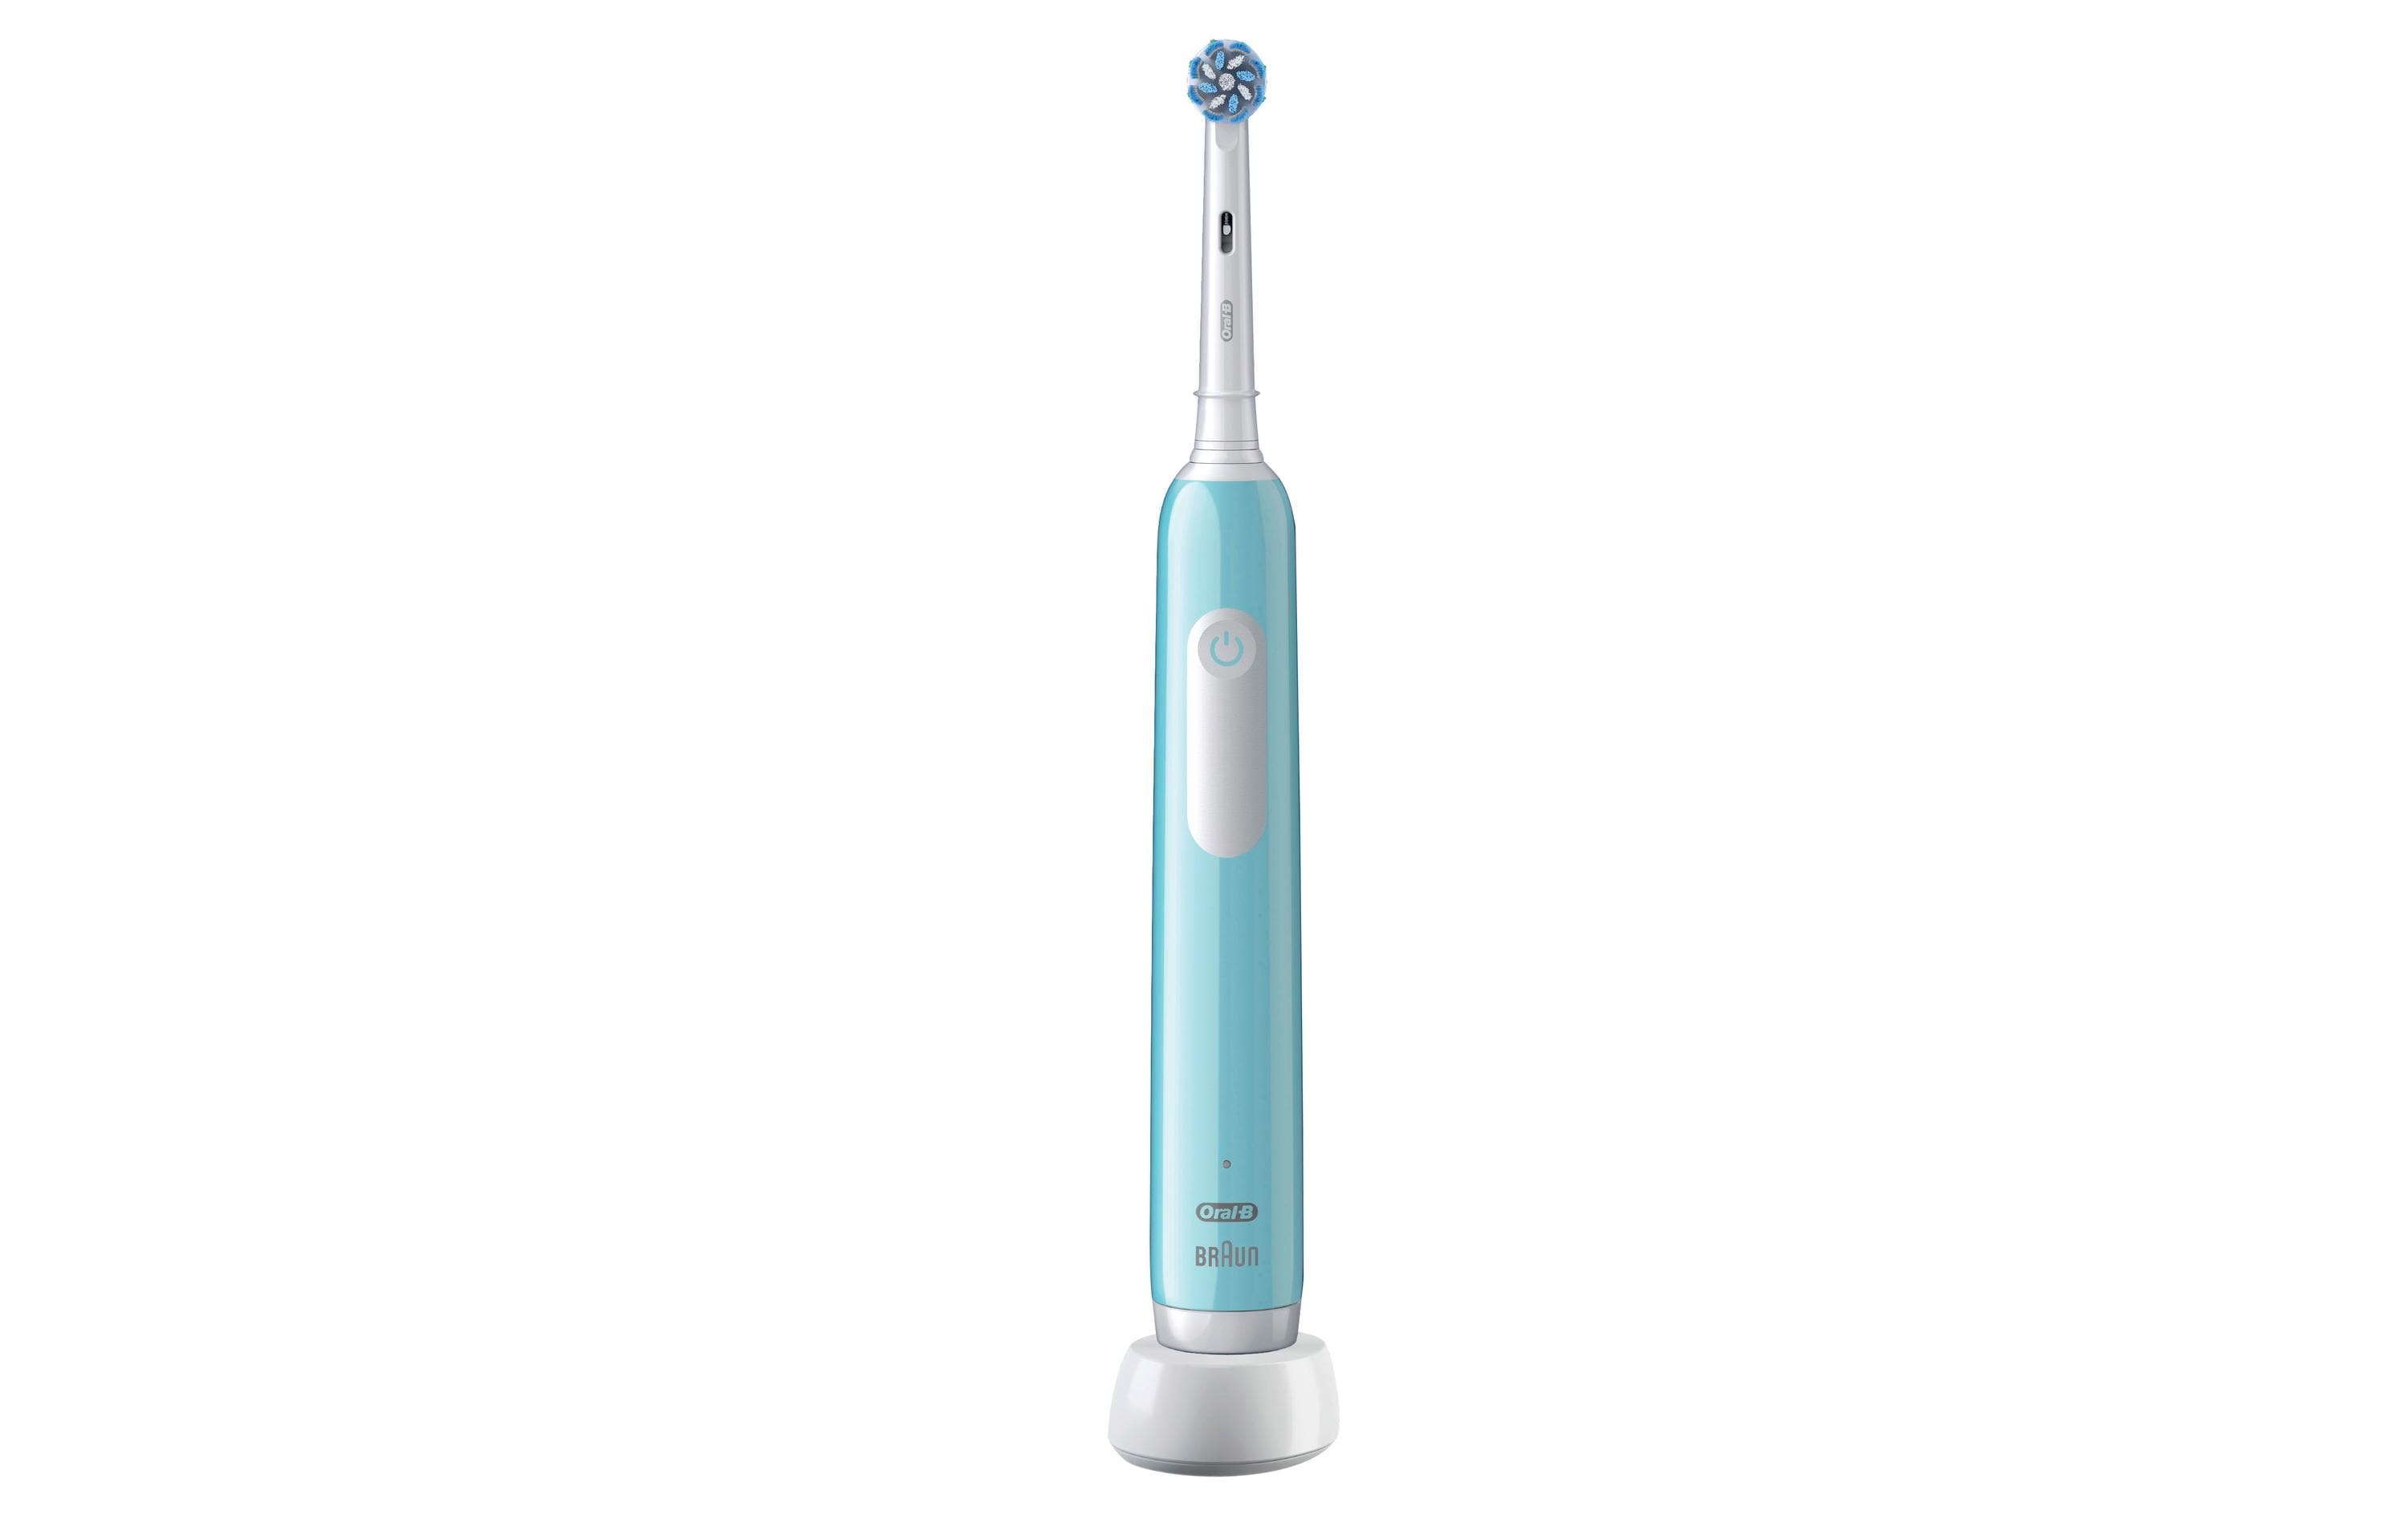 Oral-B Rotationszahnbürste Pro 1 Sensitive Clean Caribbean Blue